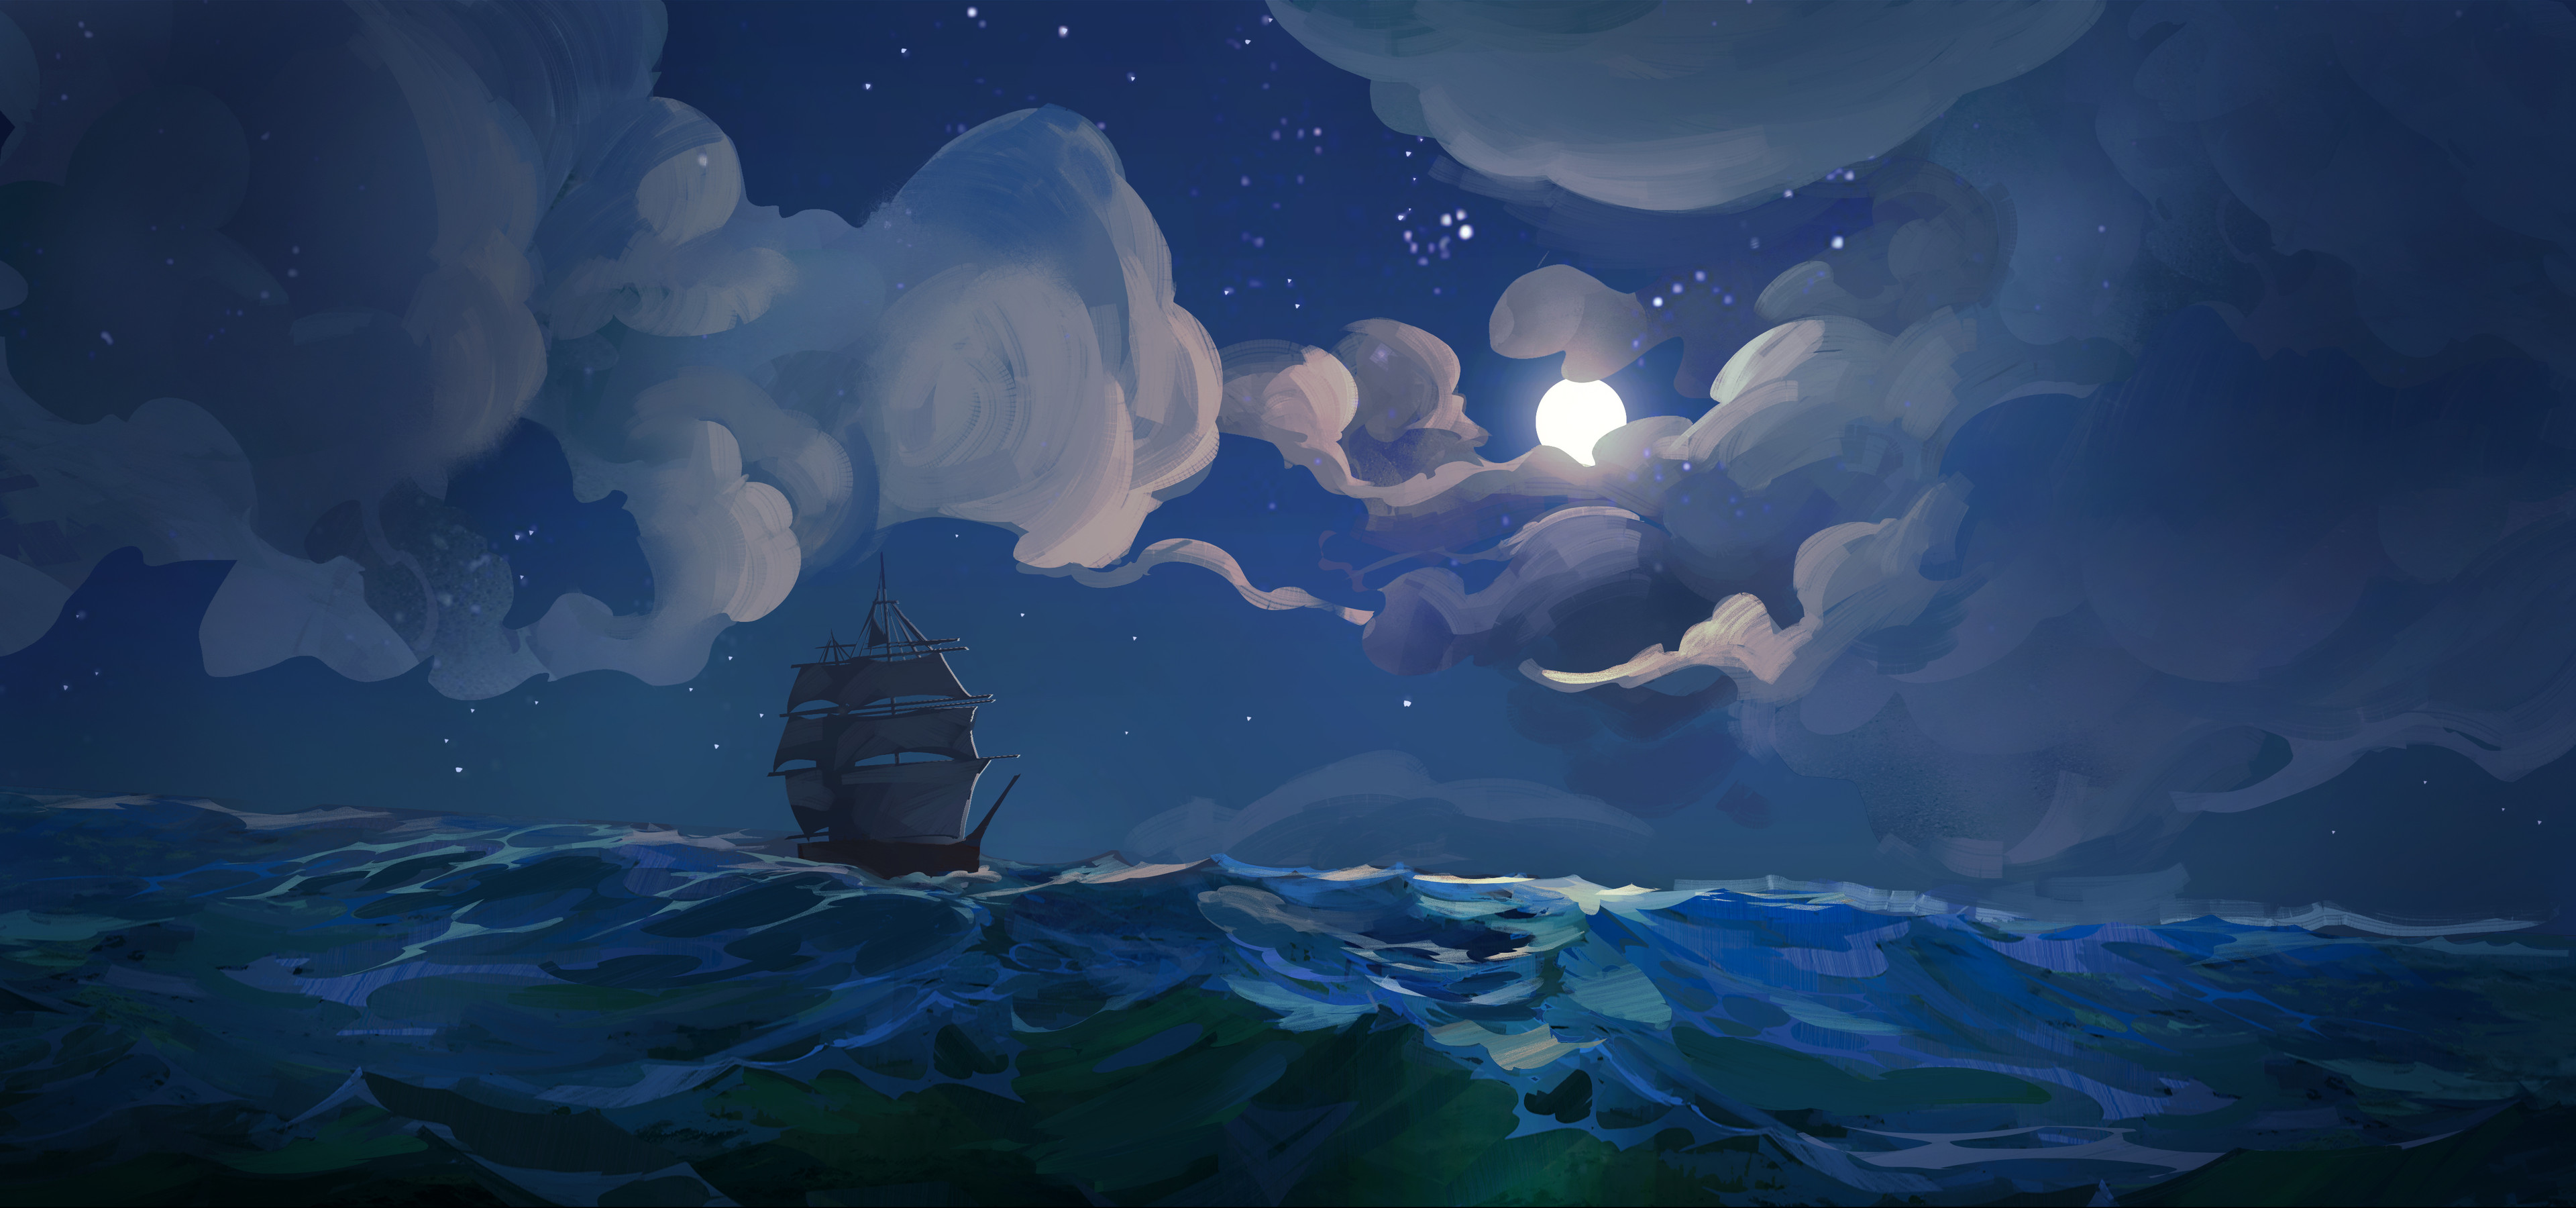 Hue Teo Digital Art Artwork Illustration Sea Night Boat Clouds Moon Sky 3840x1800